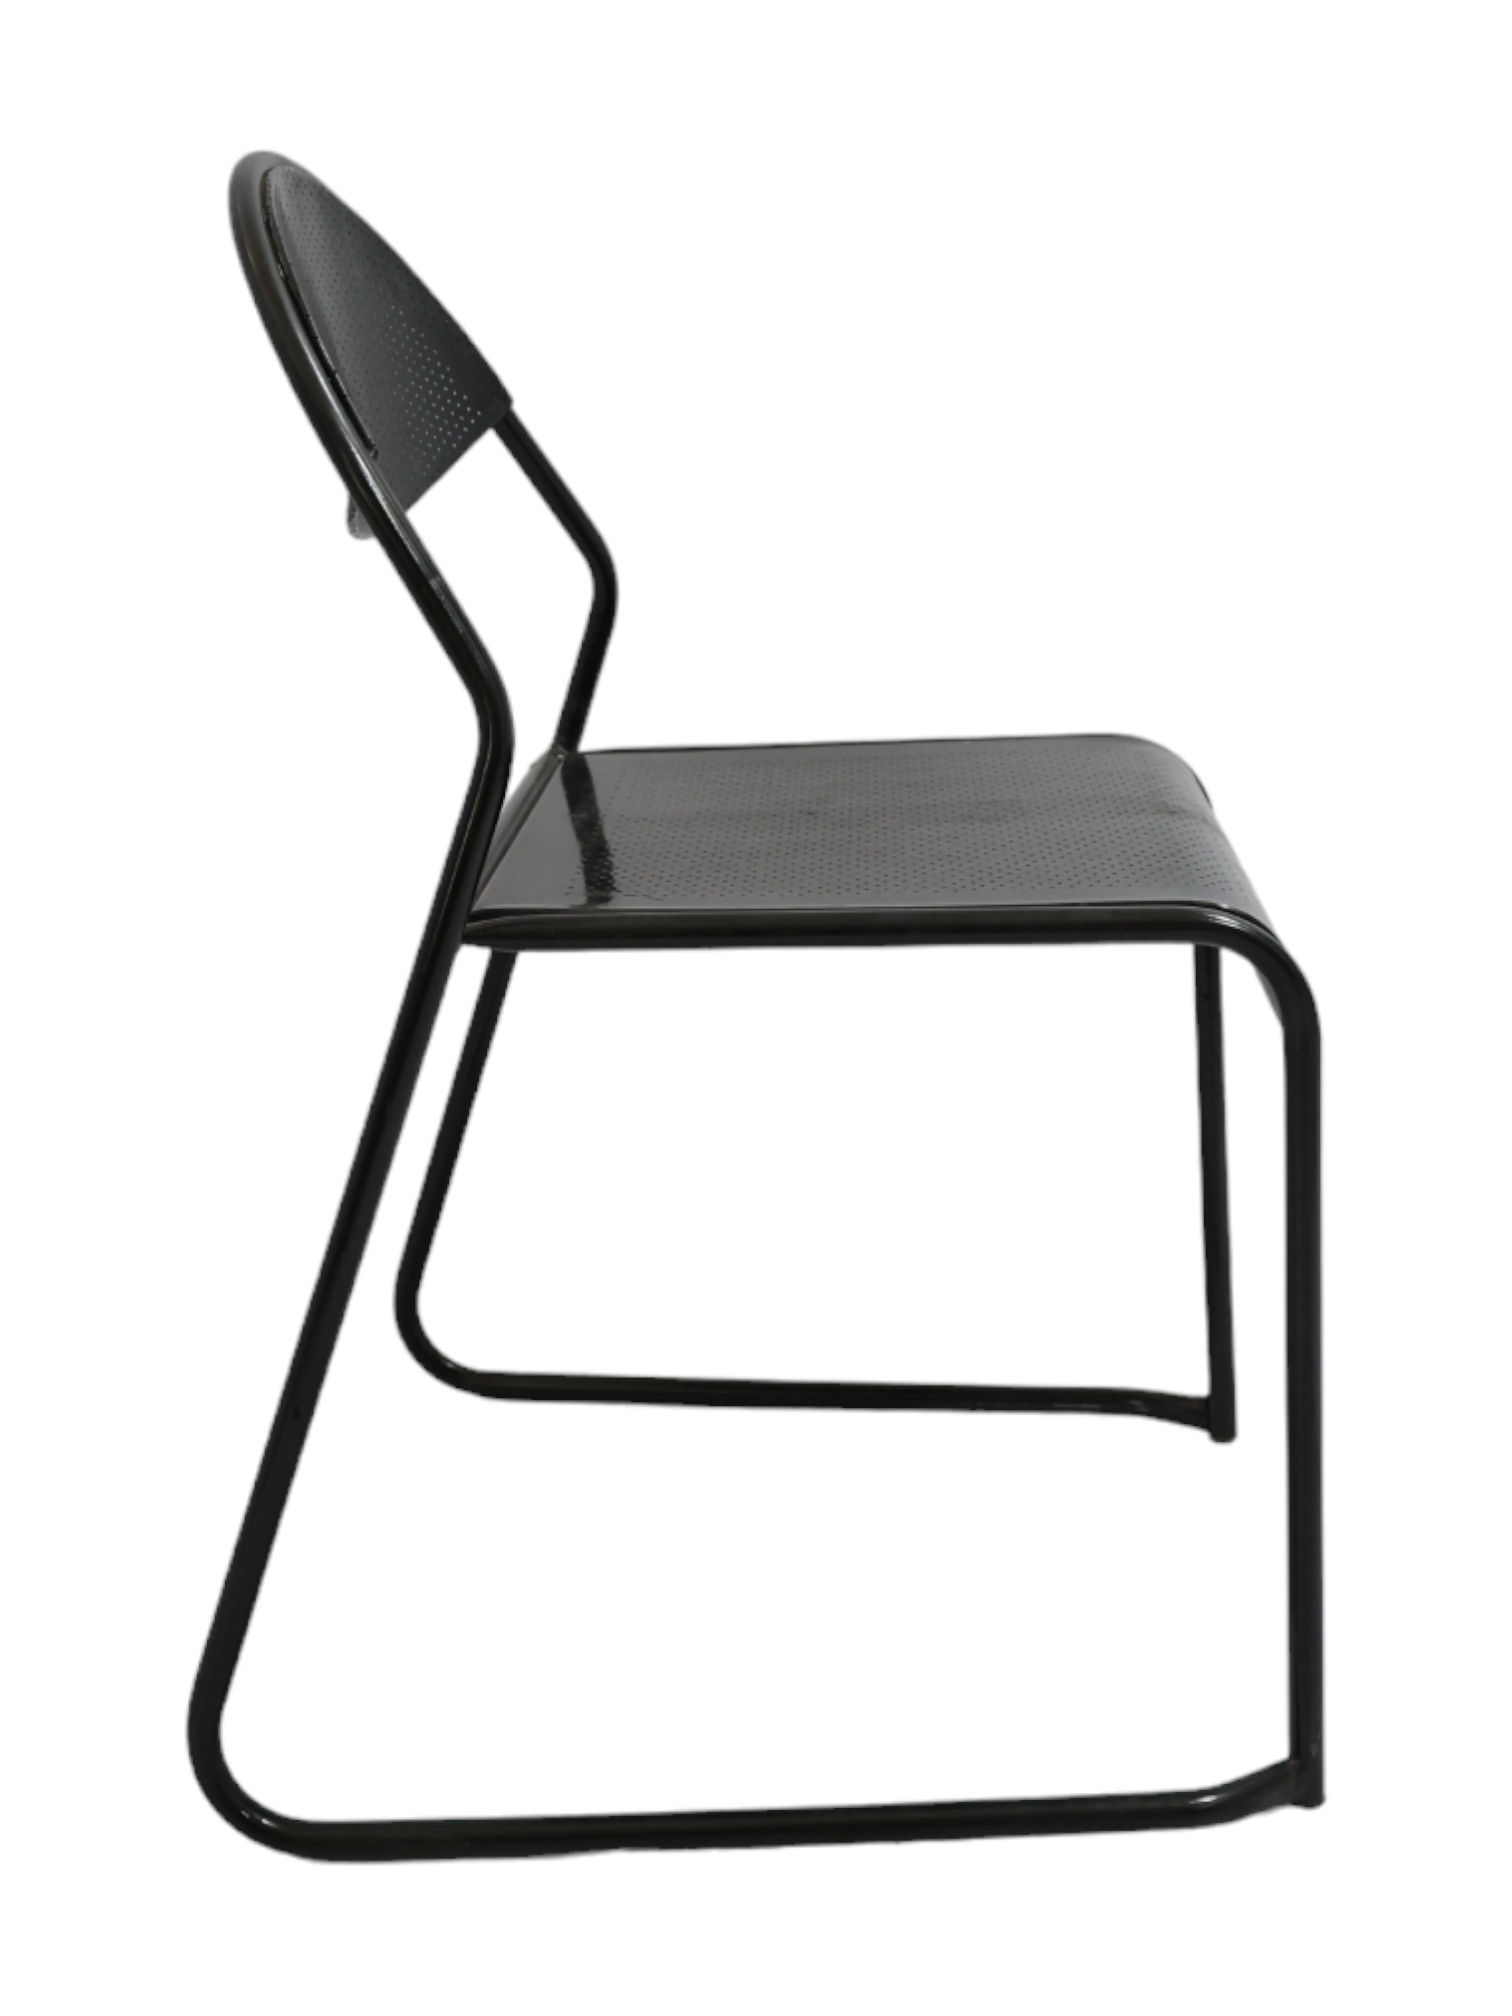 Adhunika perforated chair